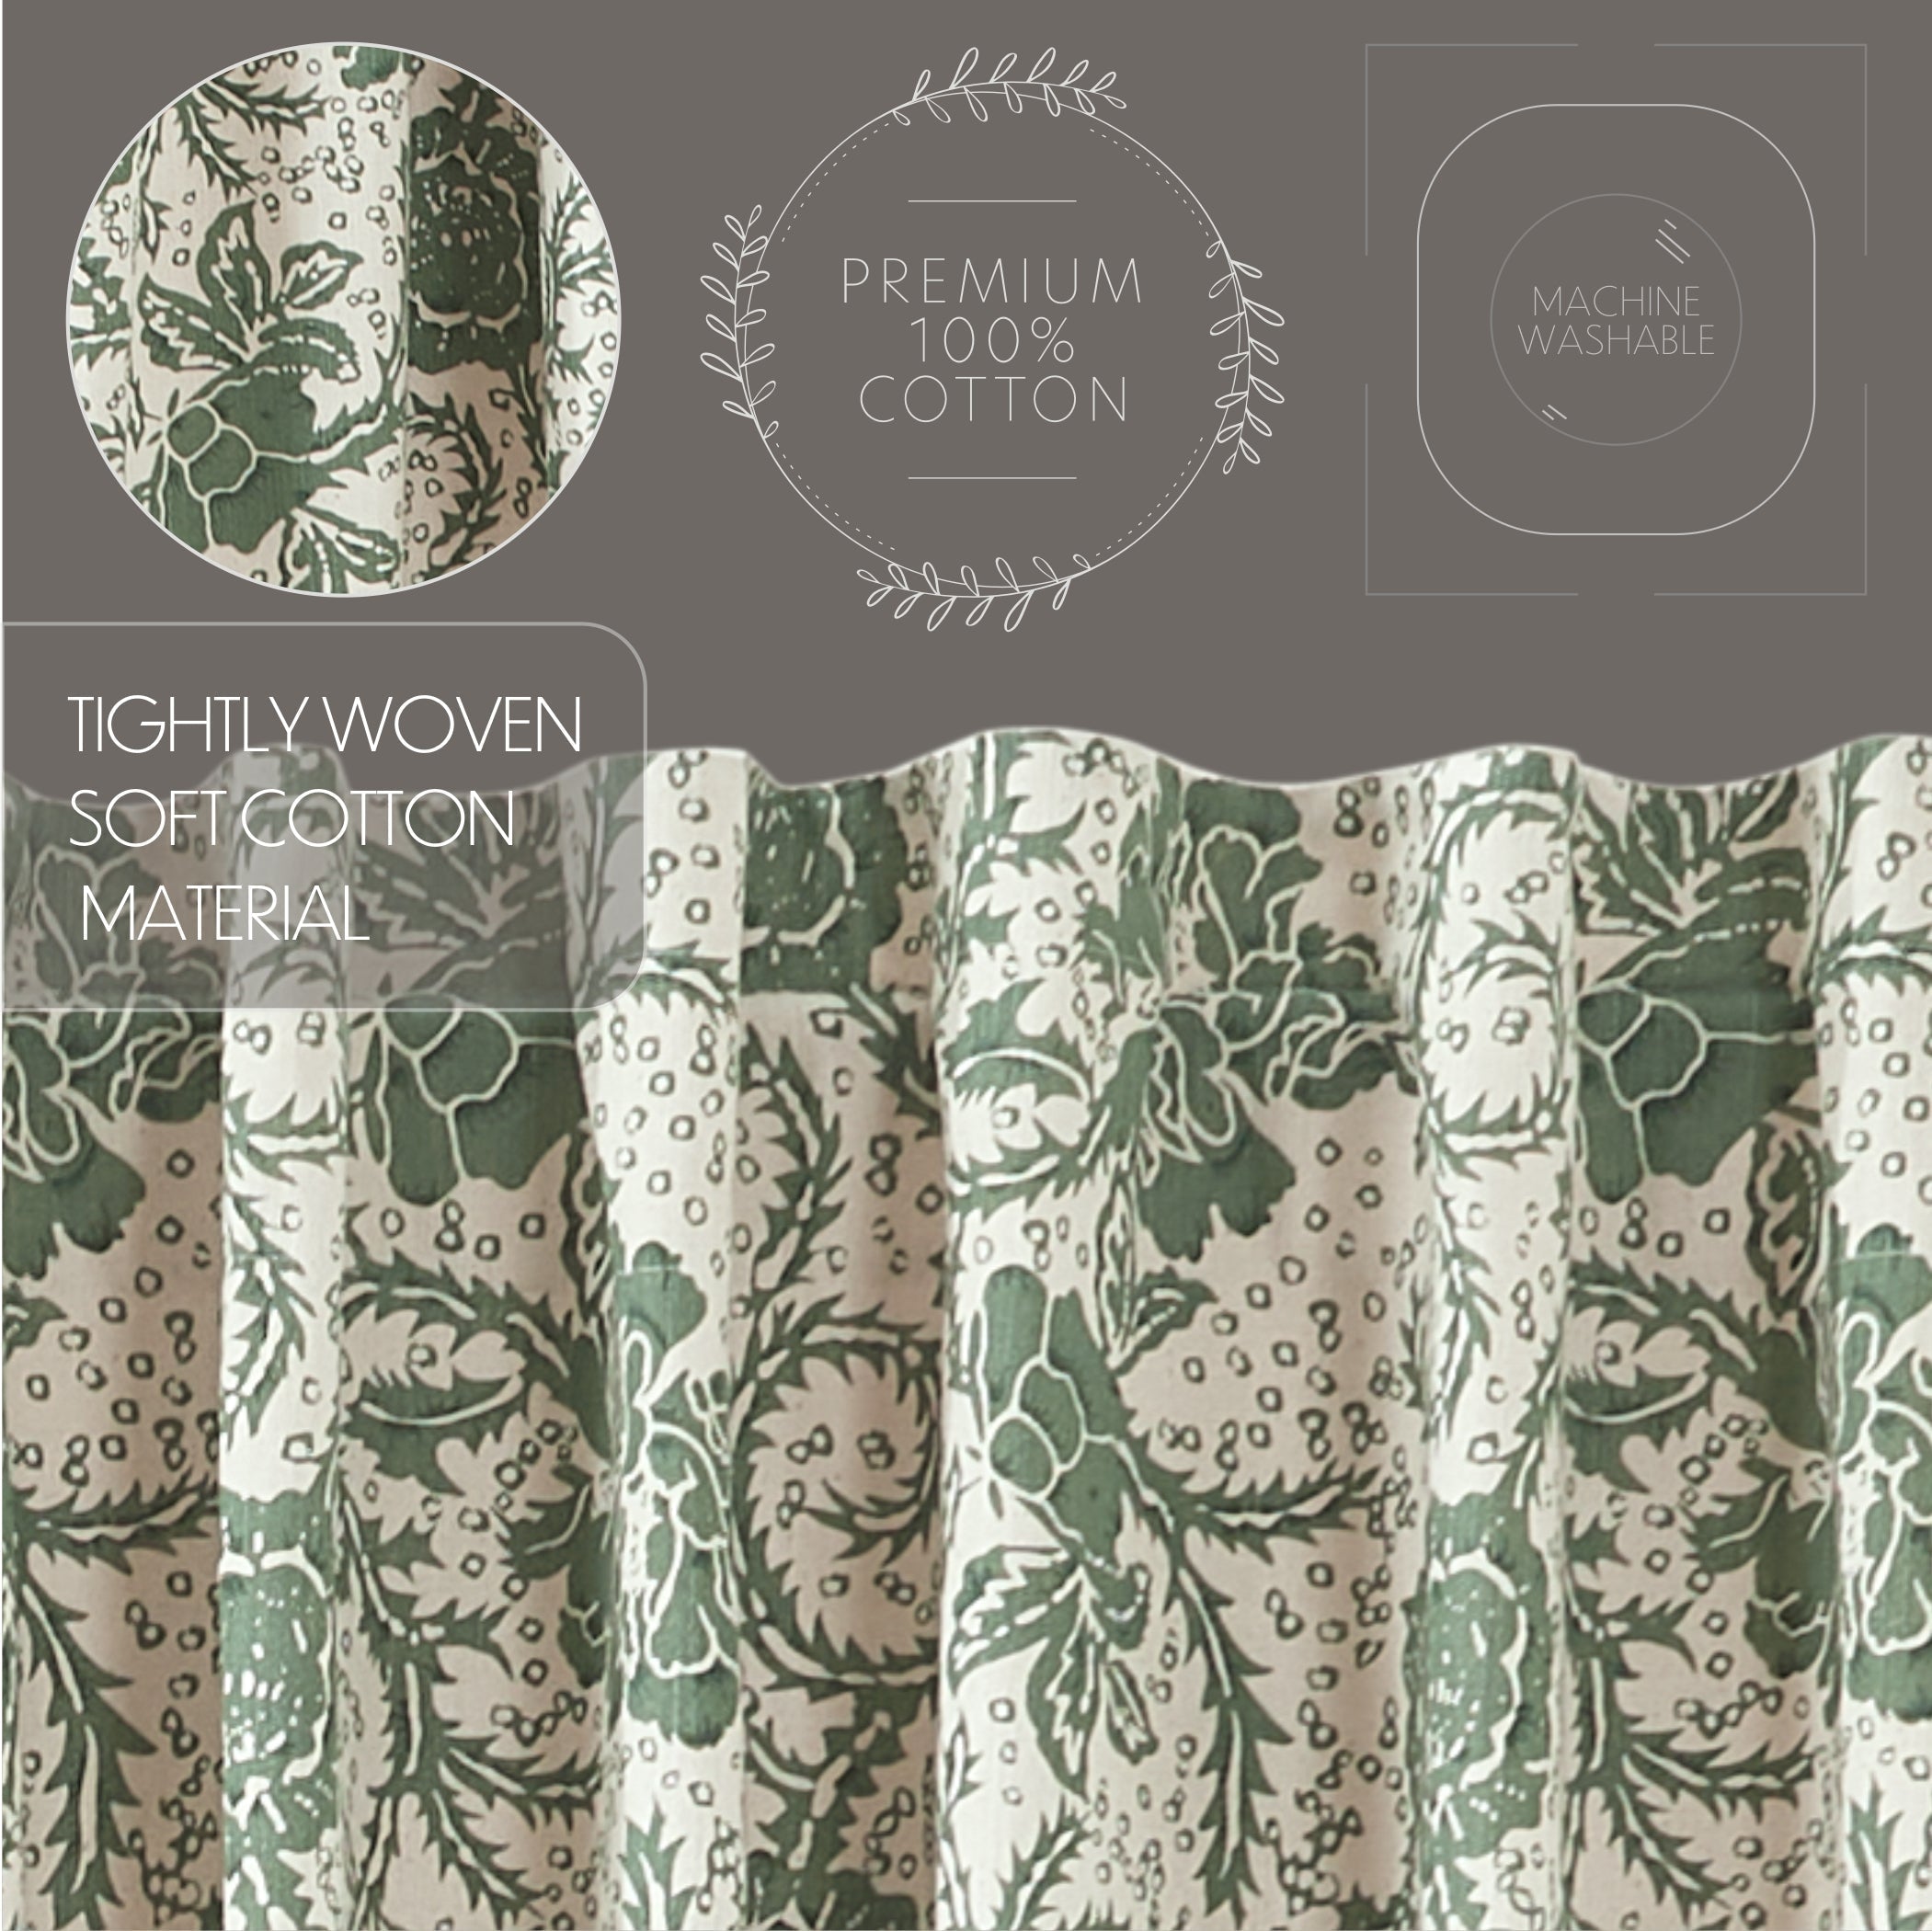 Dorset Green Floral Prairie Short Panel Curtain Set of 2 63x36x18 VHC Brands